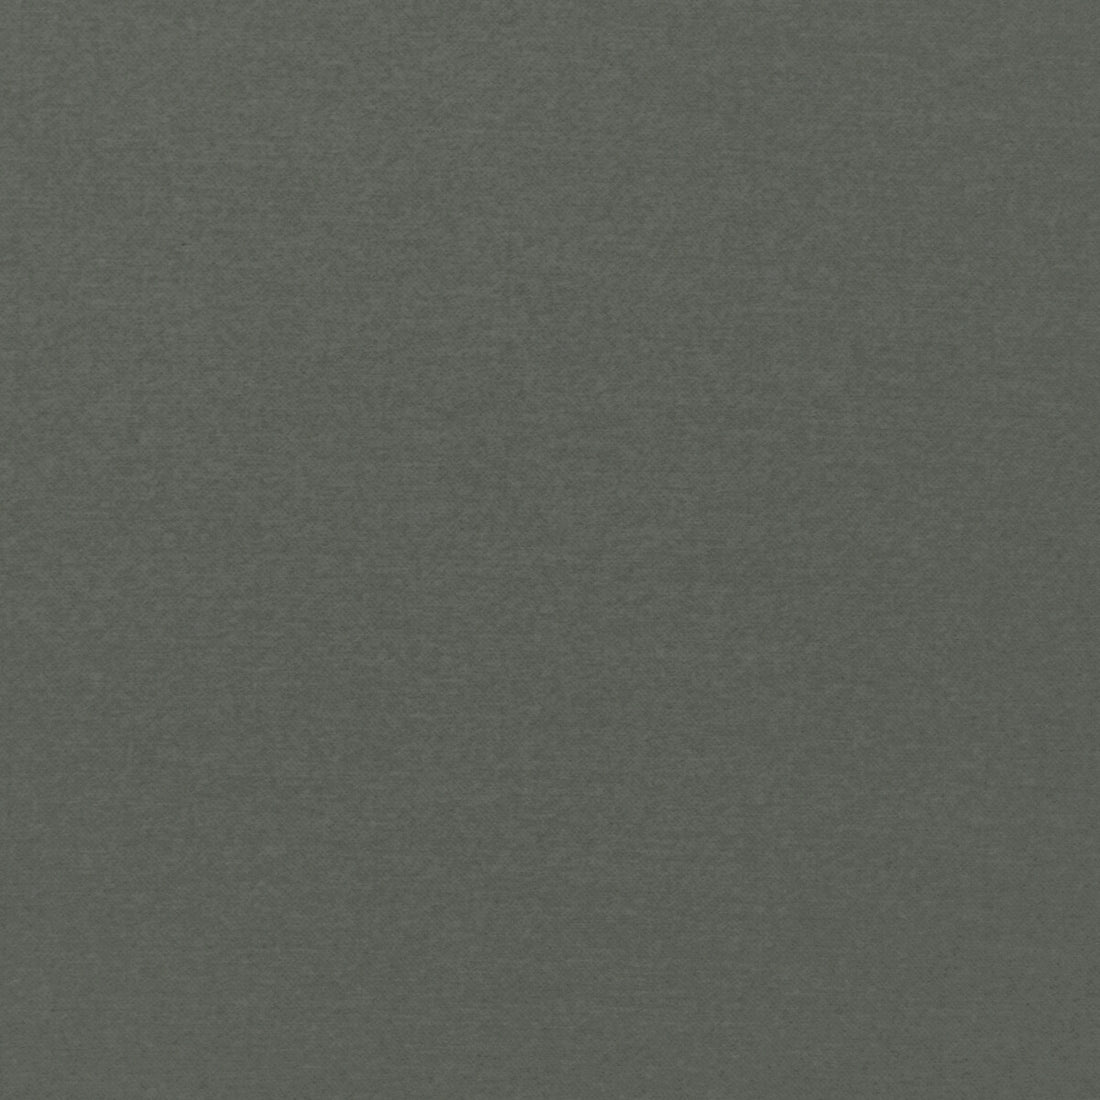 Kravet Smart fabric in 36110-11 color - pattern 36110.11.0 - by Kravet Smart in the Performance Kravetarmor collection